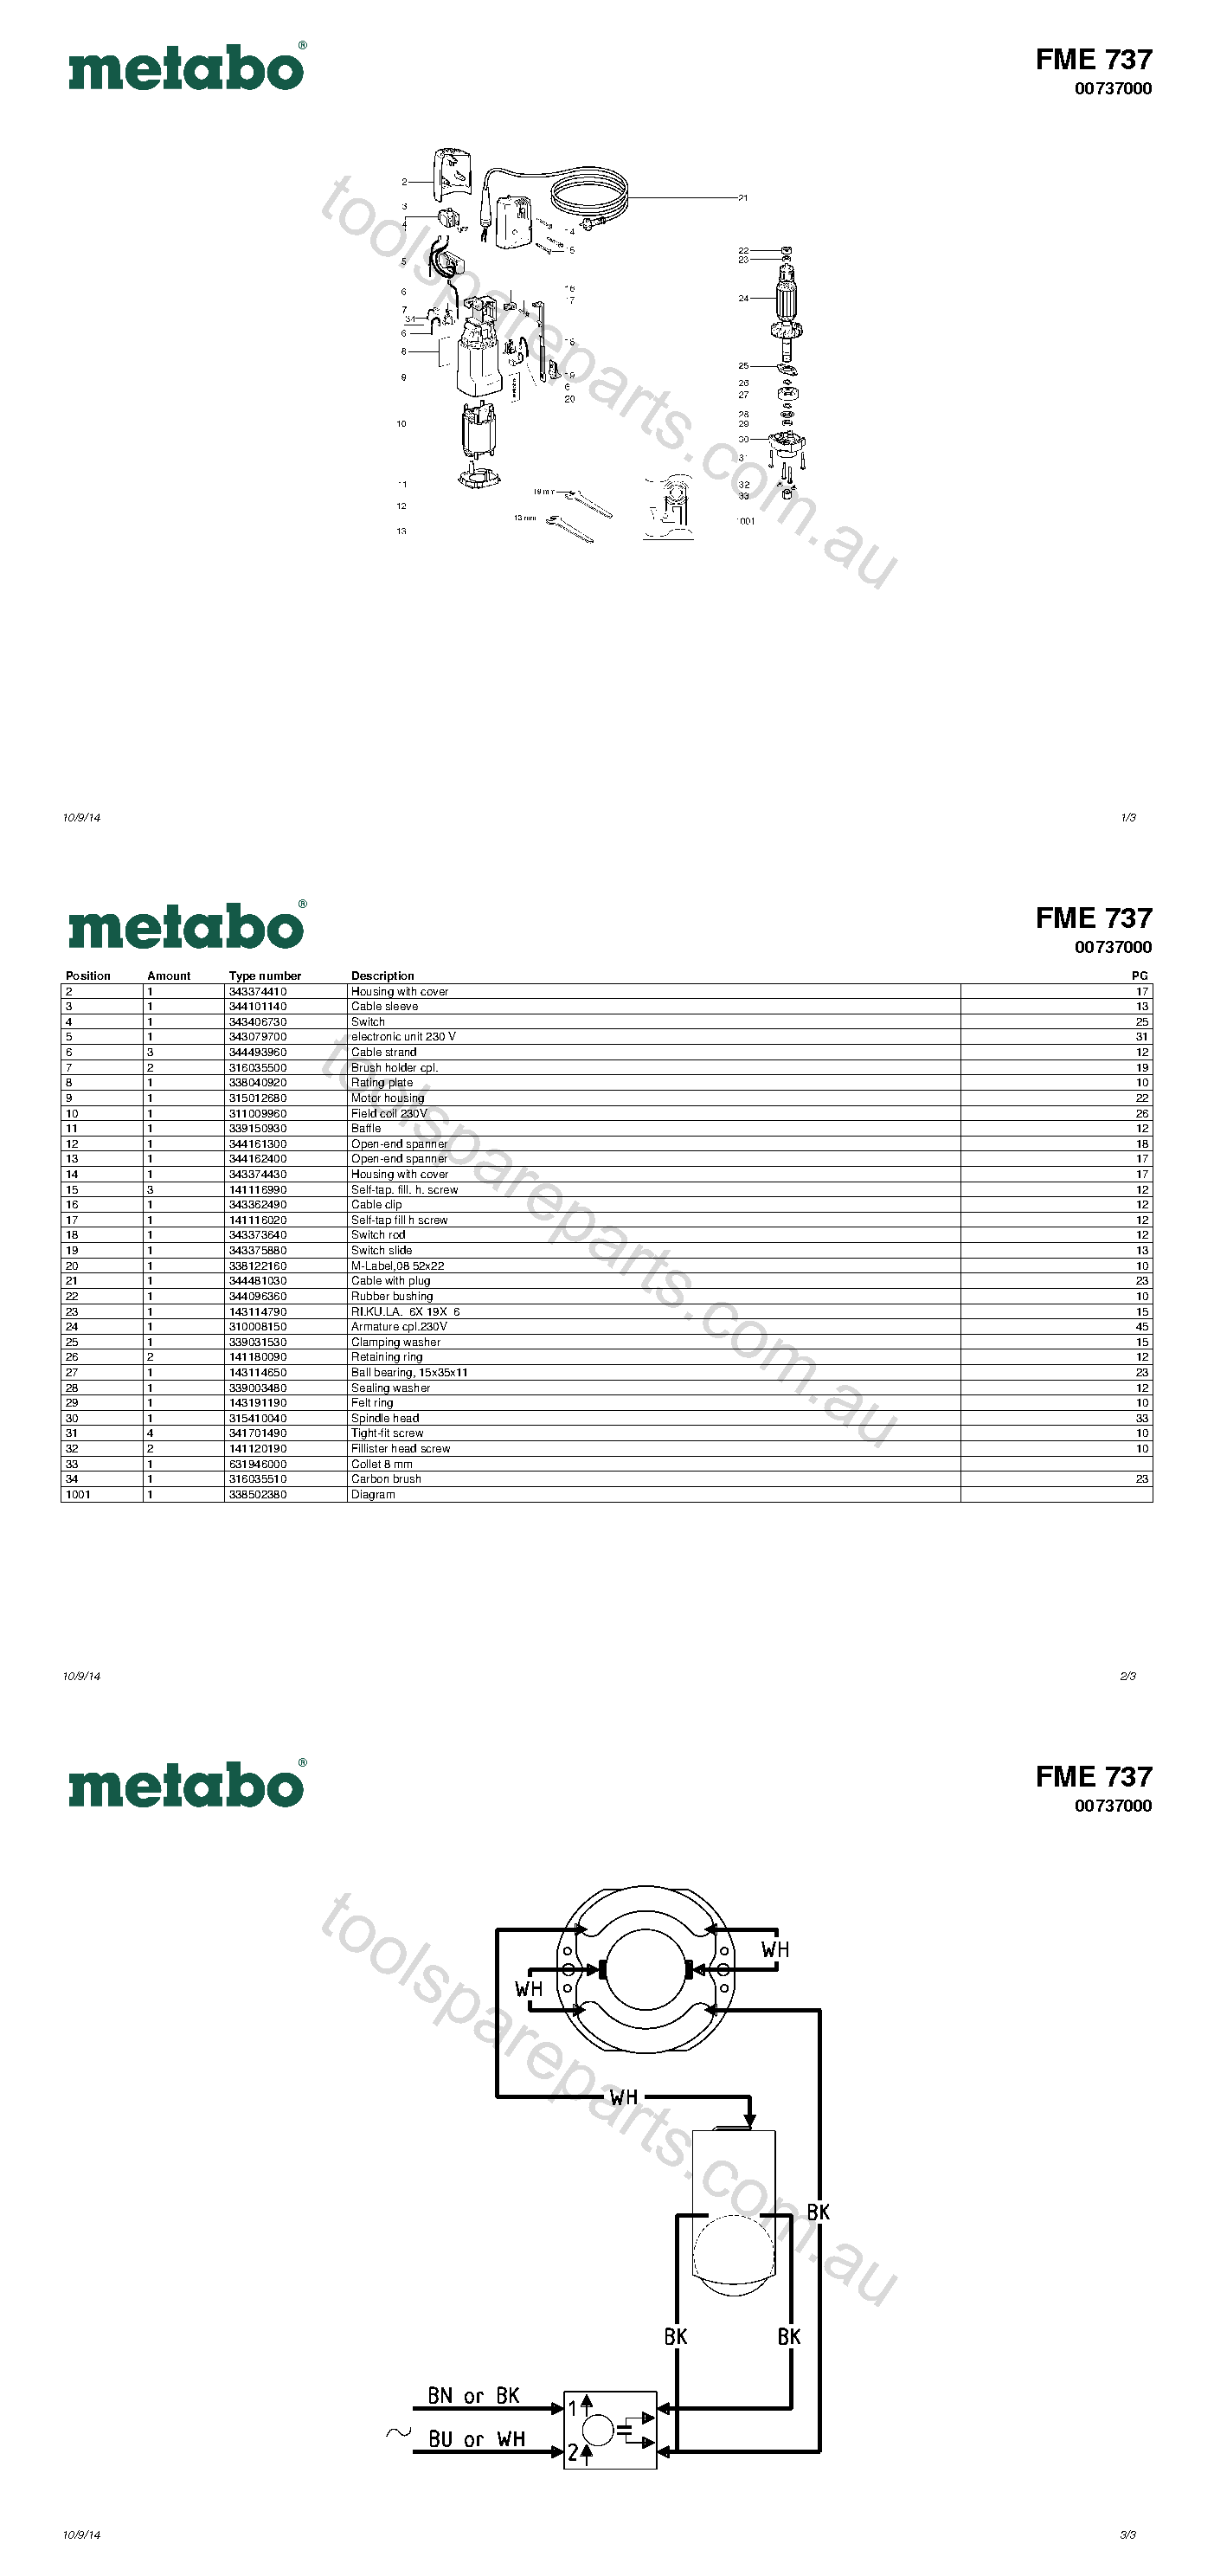 Metabo FME 737 00737000  Diagram 1